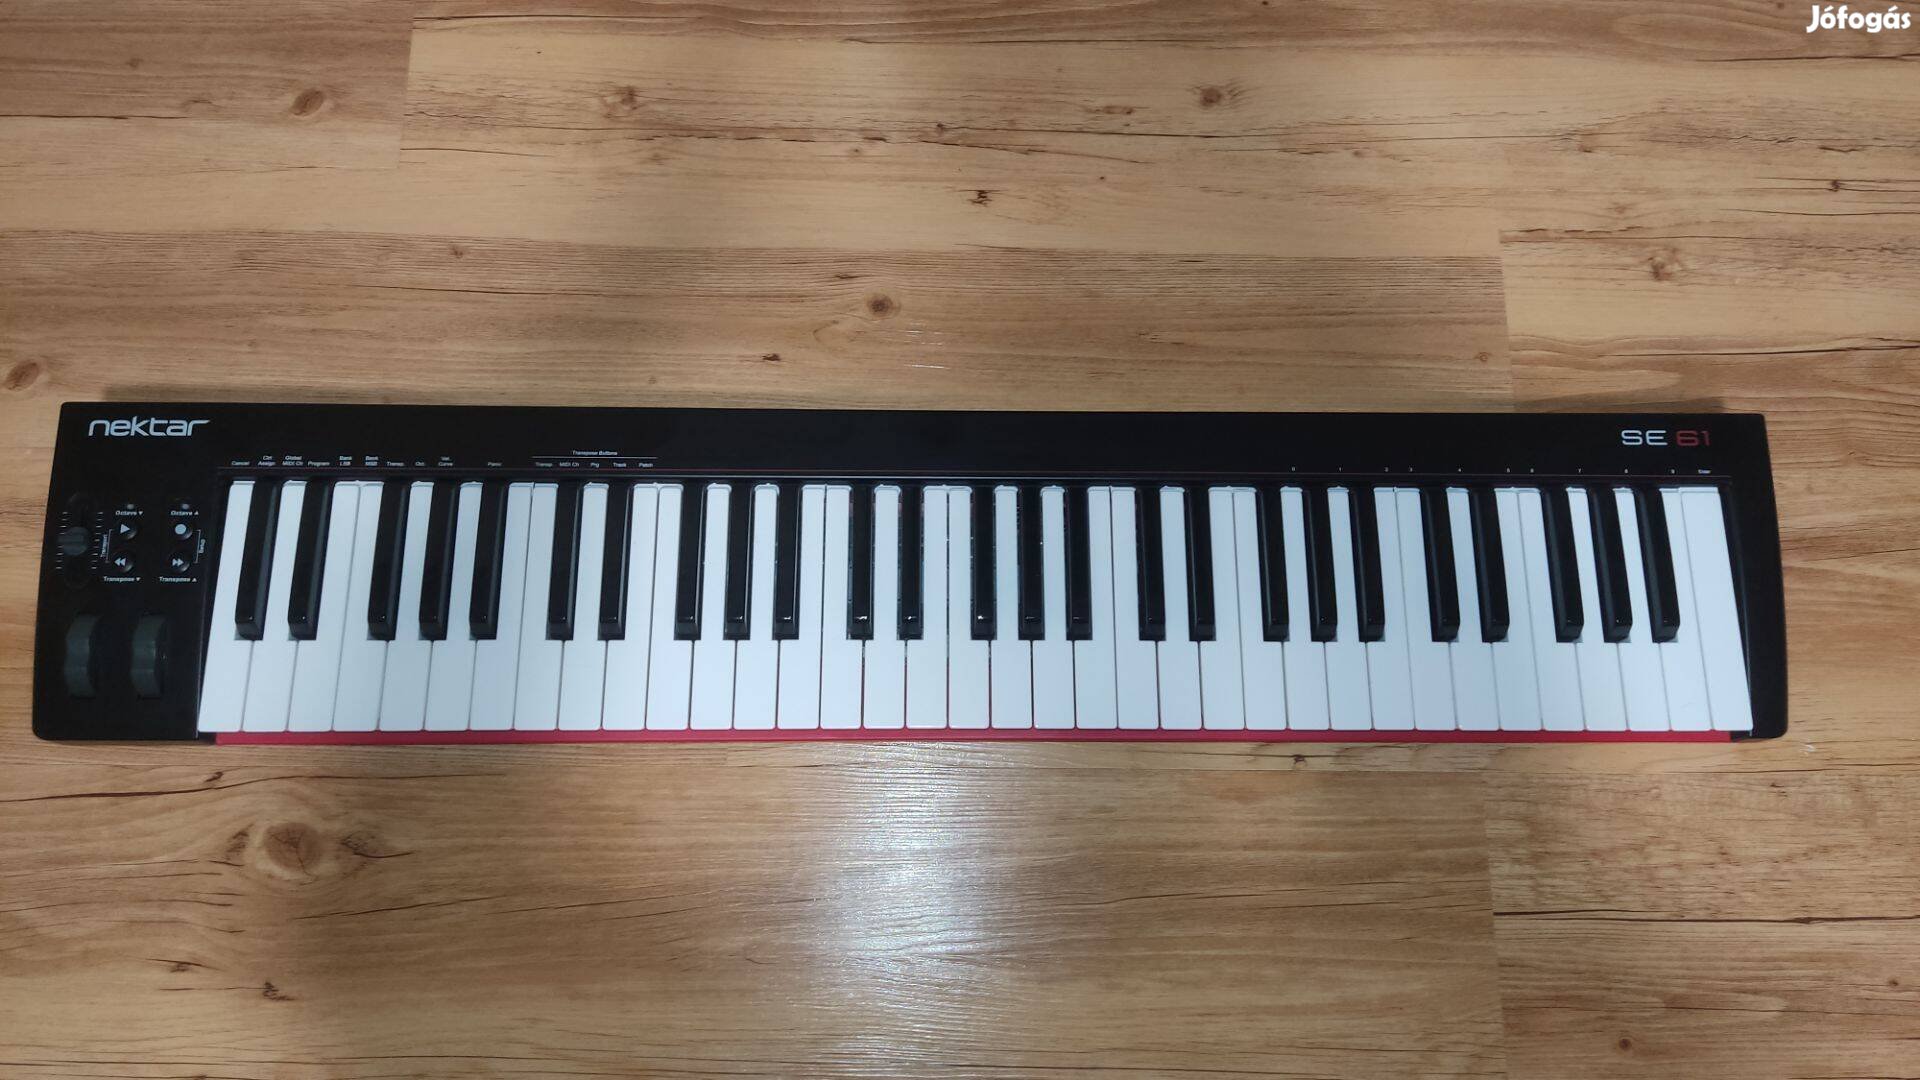 Eladó, Nektar Midi Keyboard